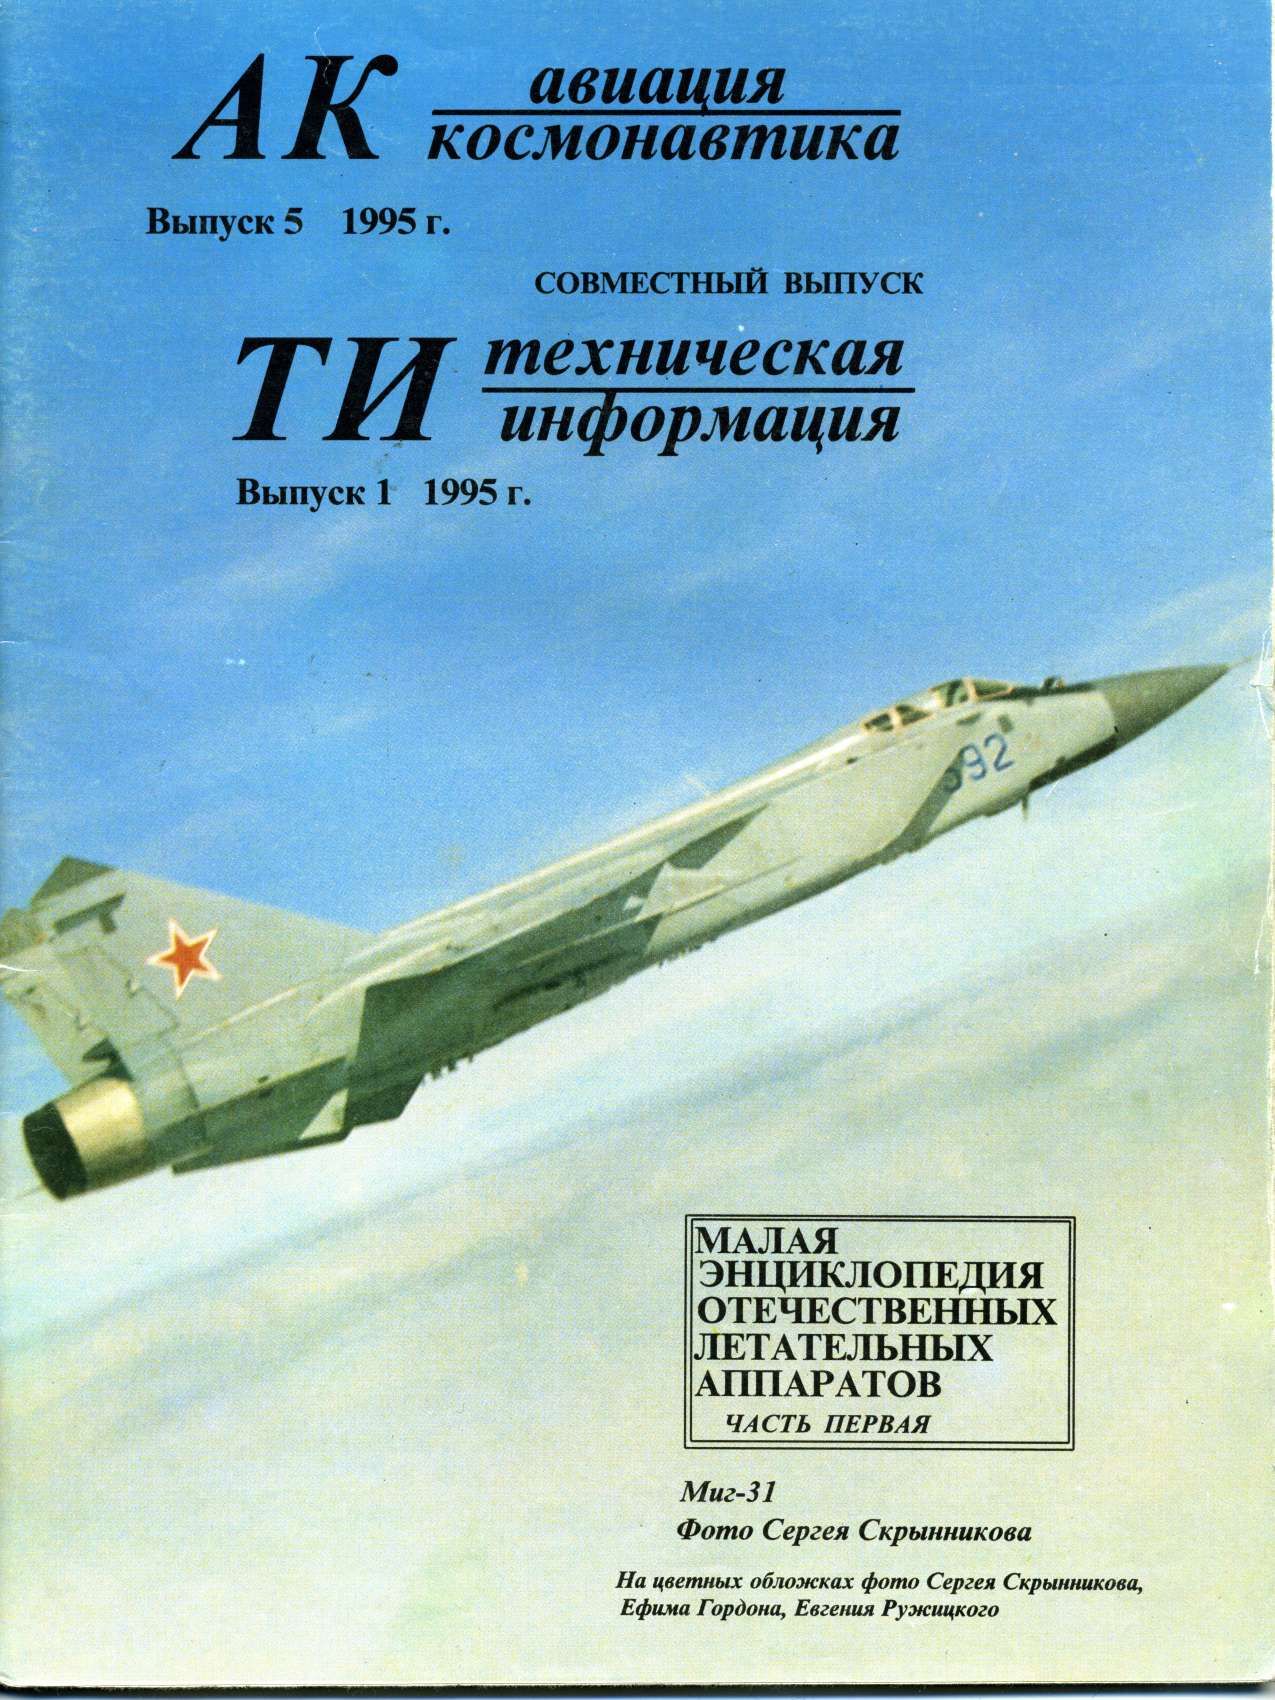  Авиация и космонавтика Журнал: Авиация и космонавтика 1995 01